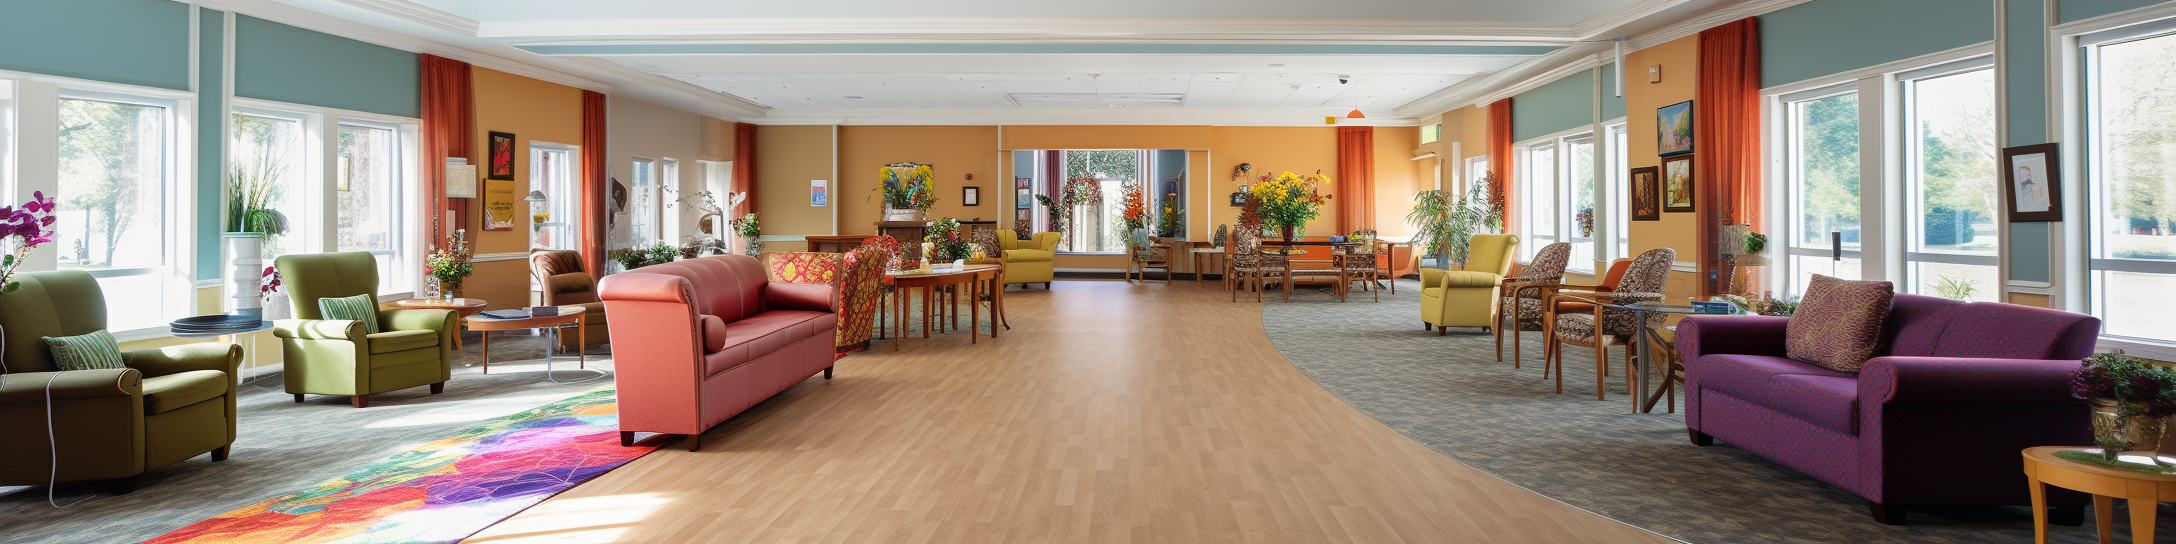 Clean Carpets in Senior Living Facilities